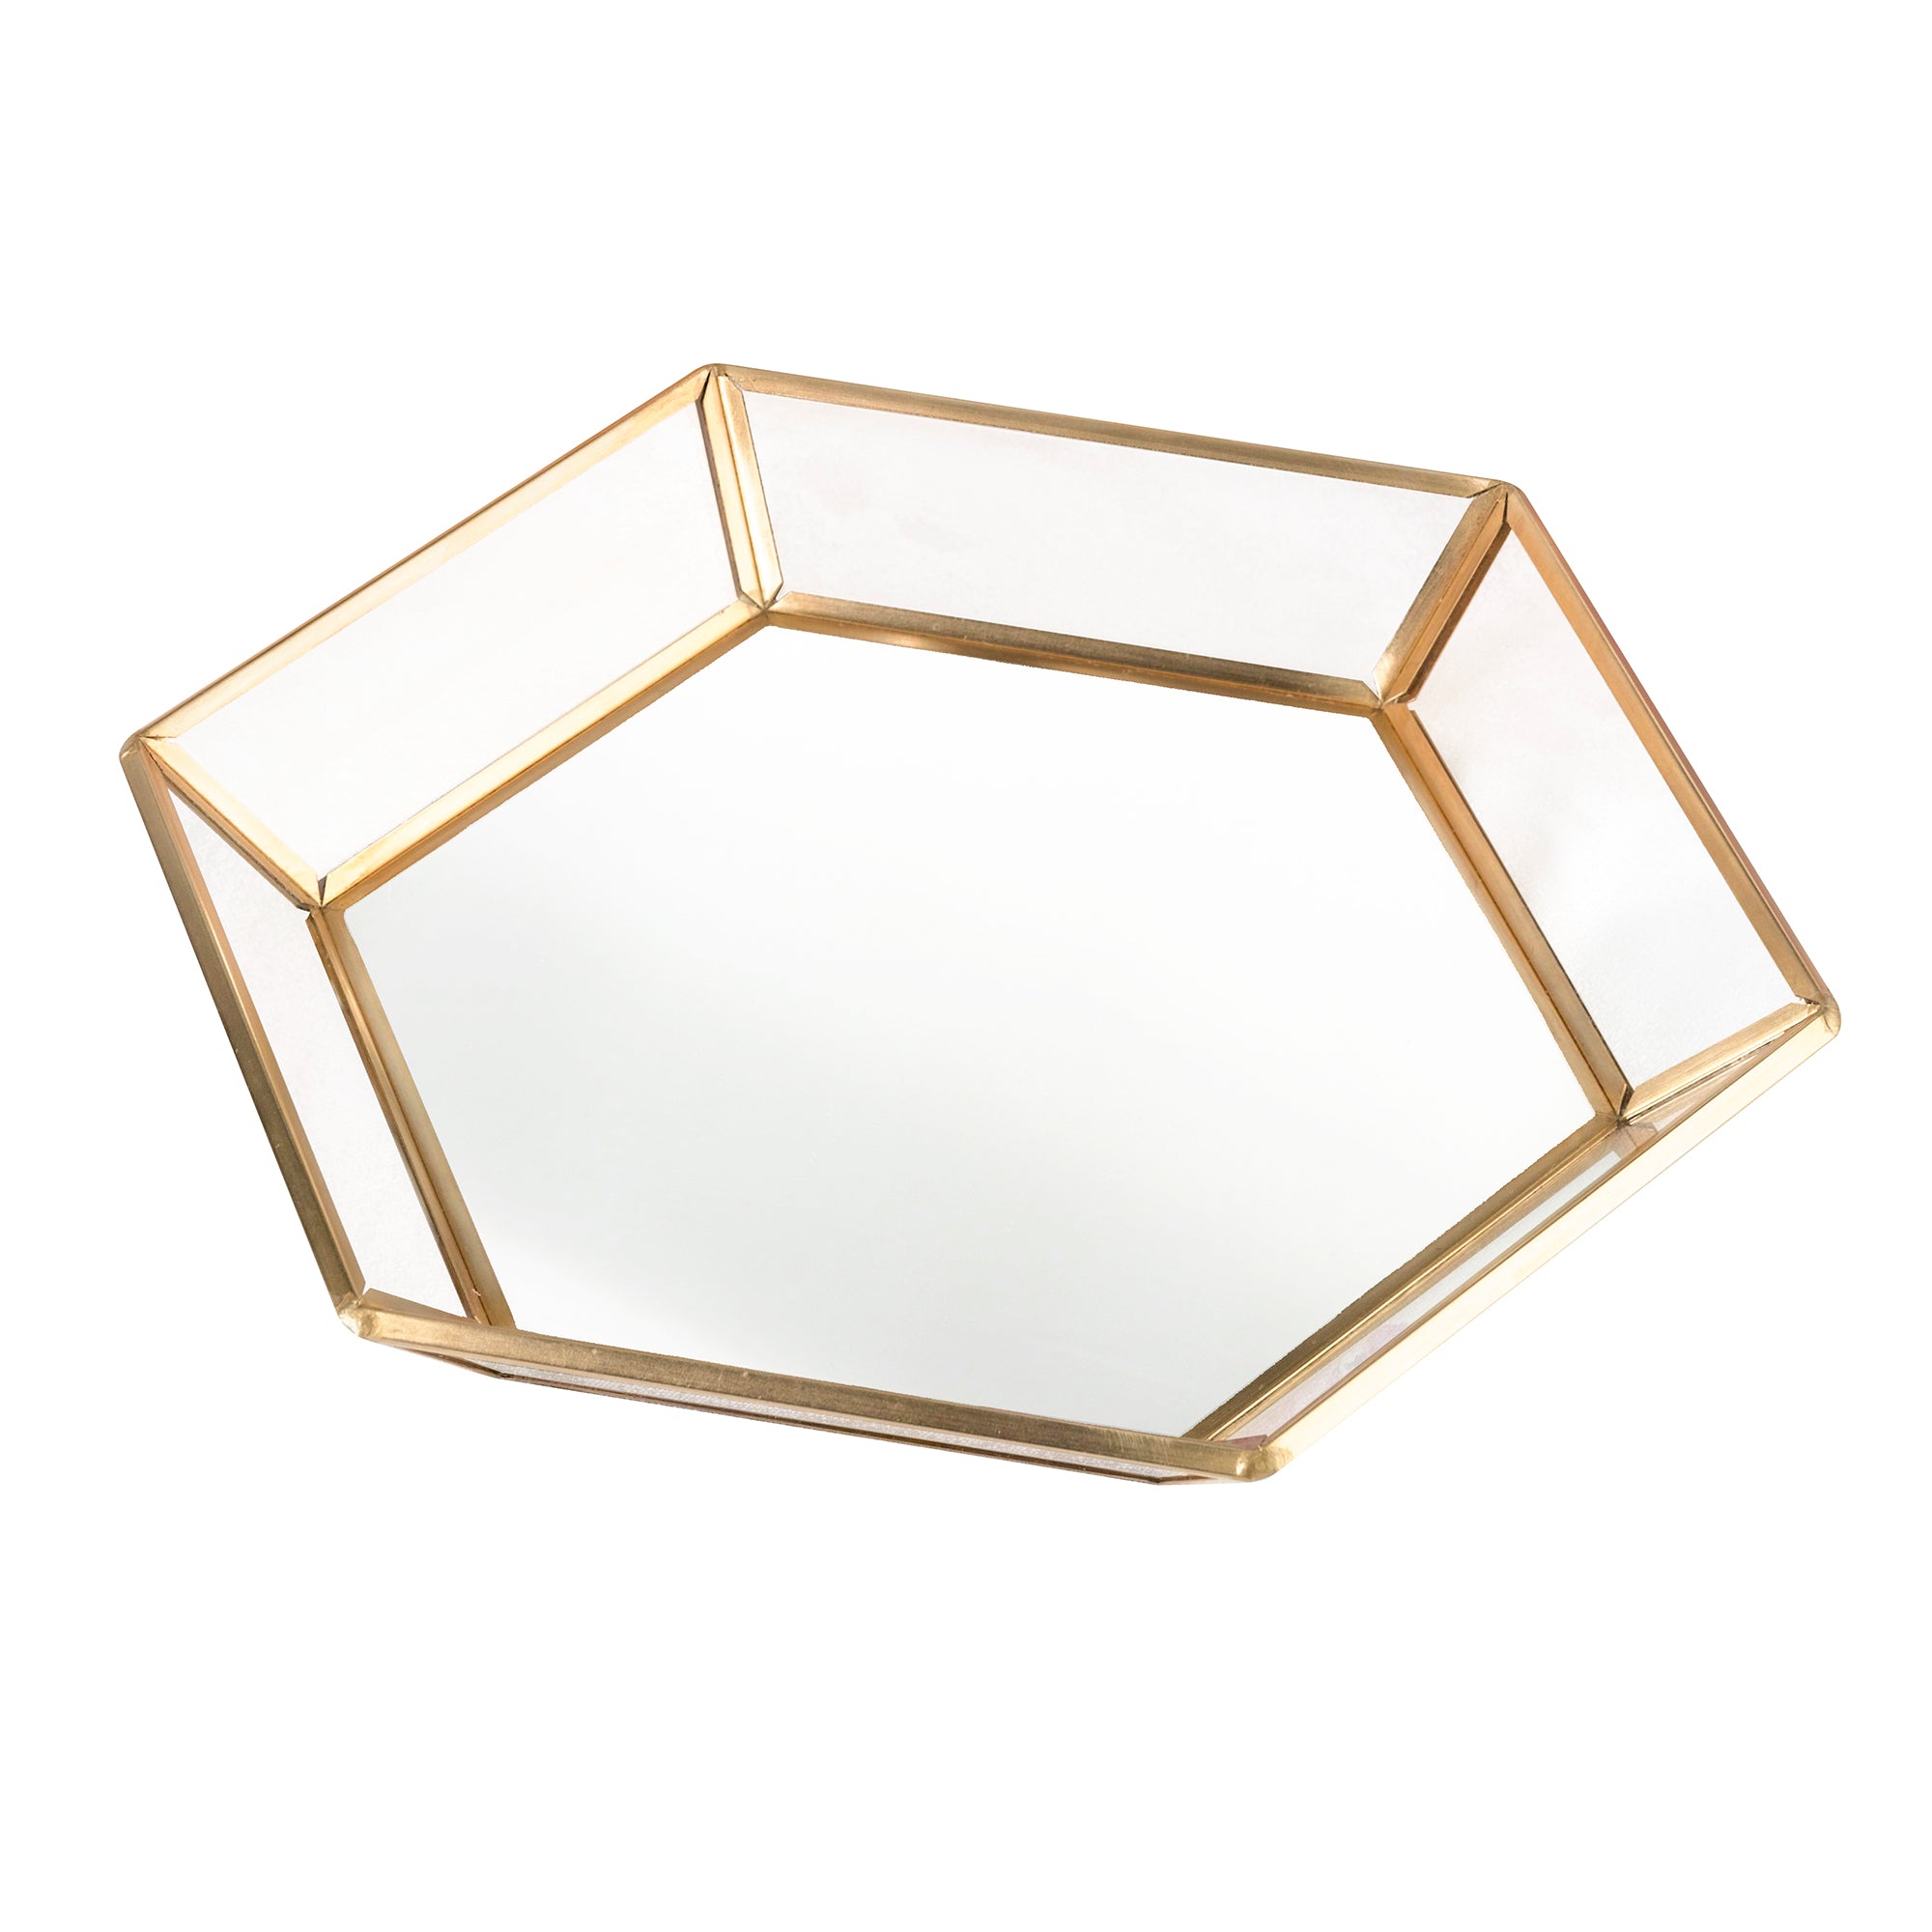 Geometric Gold Edge Mirrored Trinket Tray